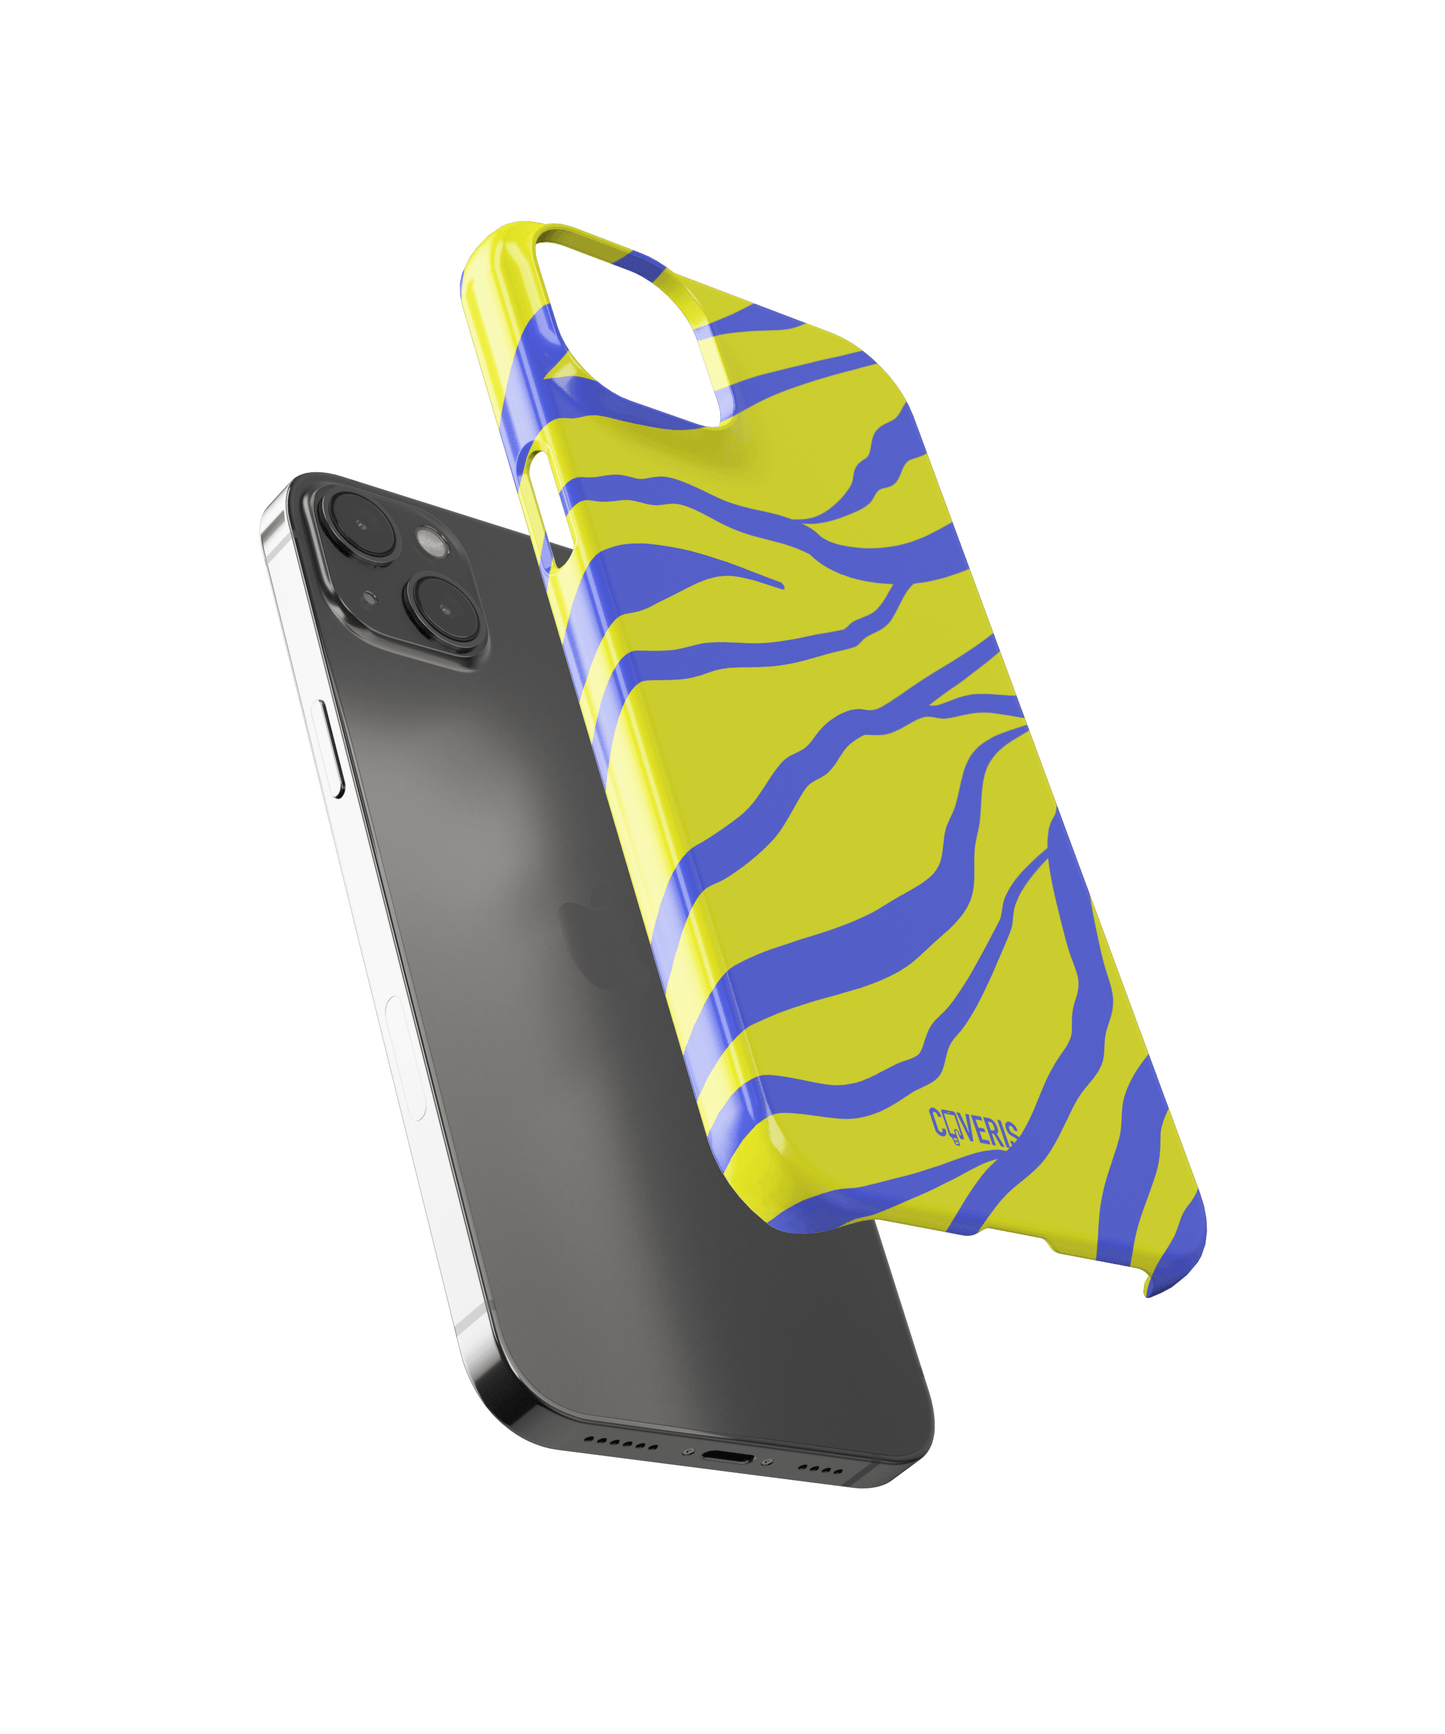 Neonique - Samsung Galaxy Note 8 phone case